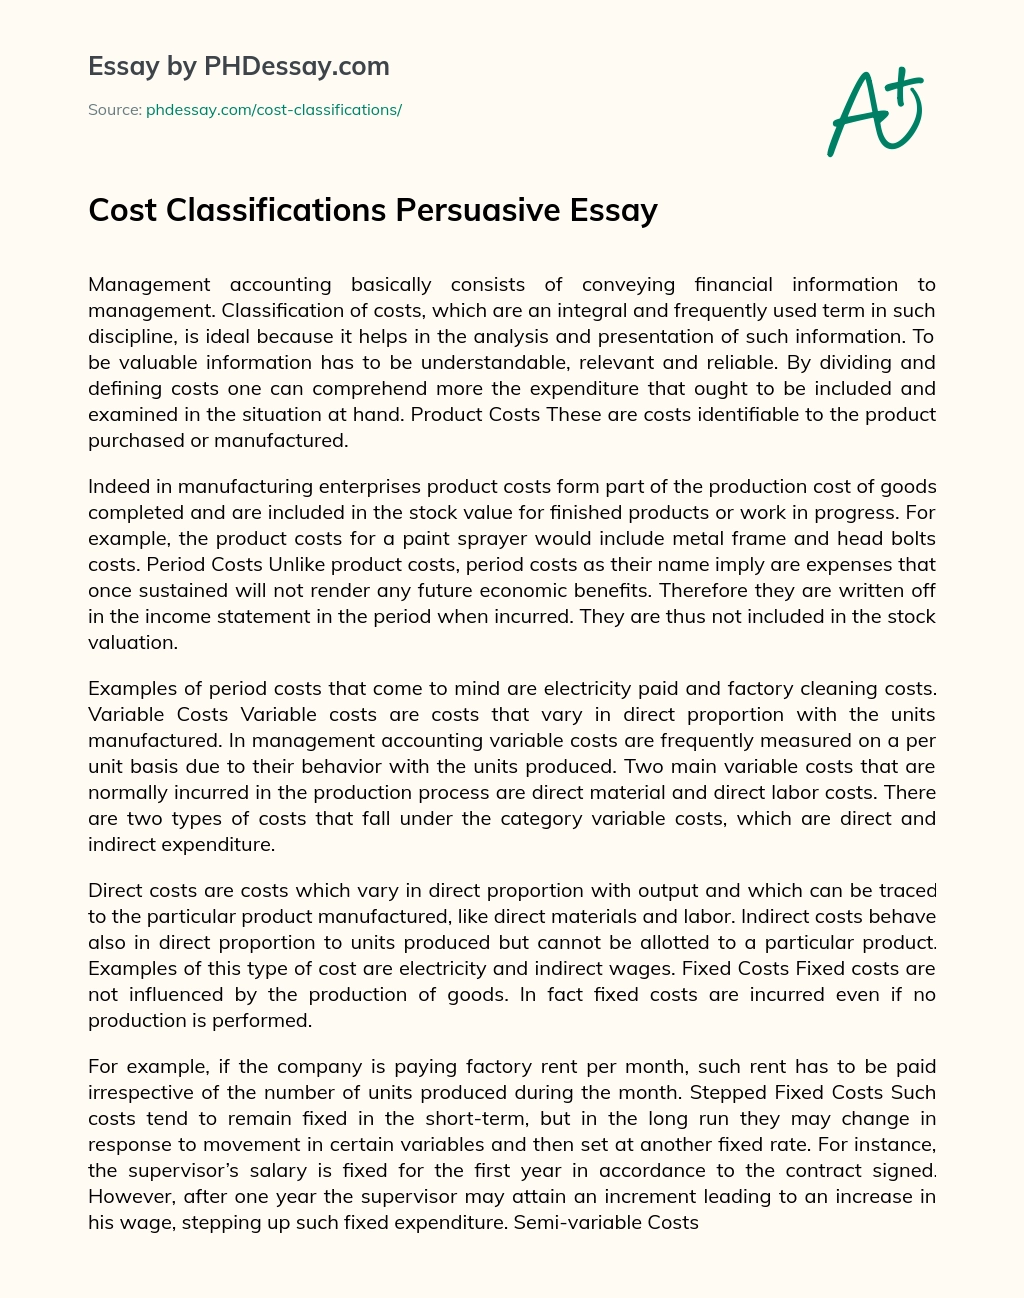 Cost Classifications Persuasive Essay essay